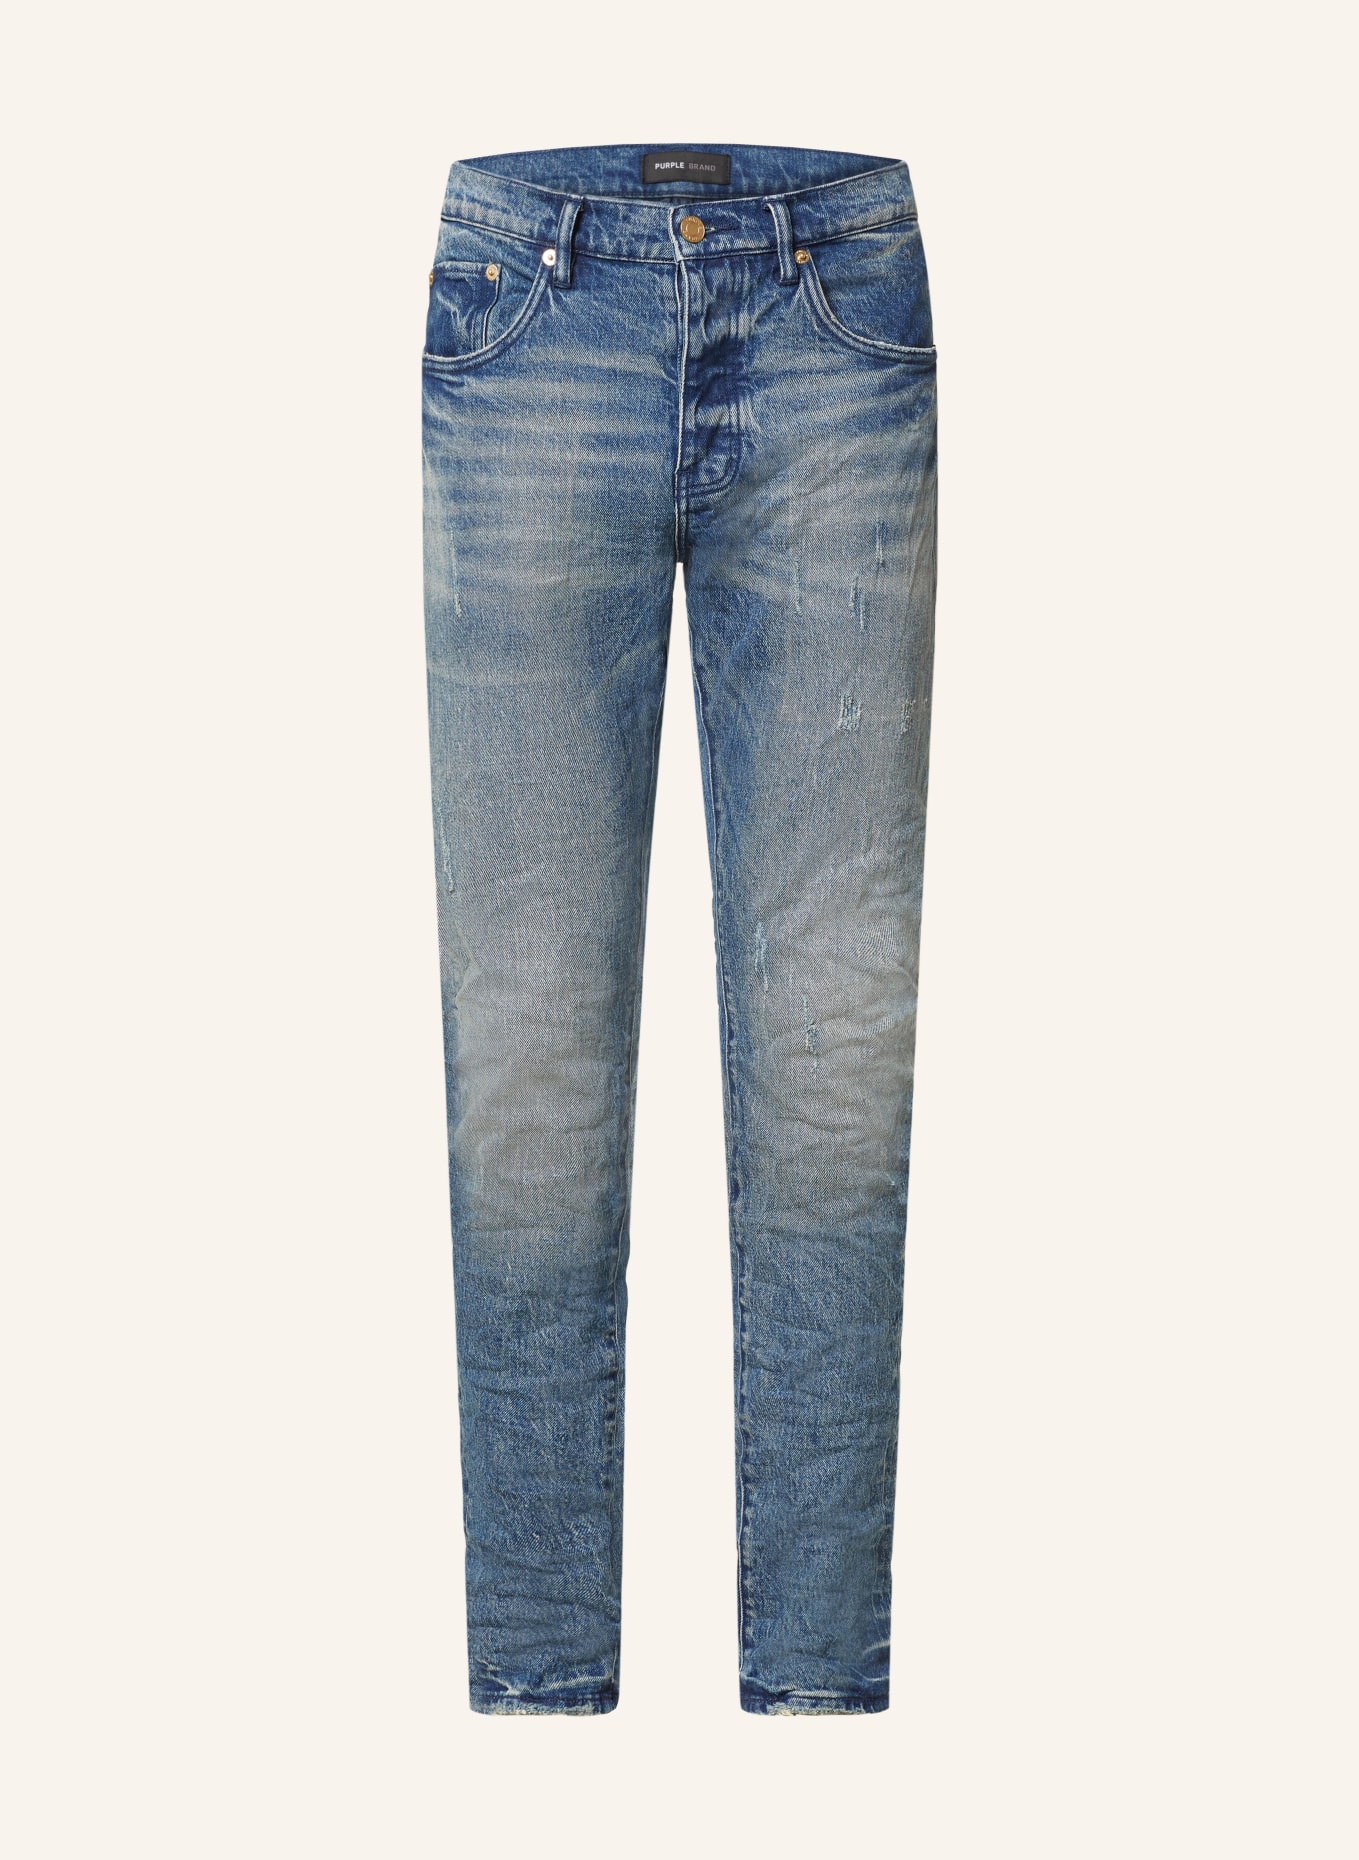 PURPLE BRAND Destroyed Jeans Skinny Fit, Farbe: MID INDIGO (Bild 1)